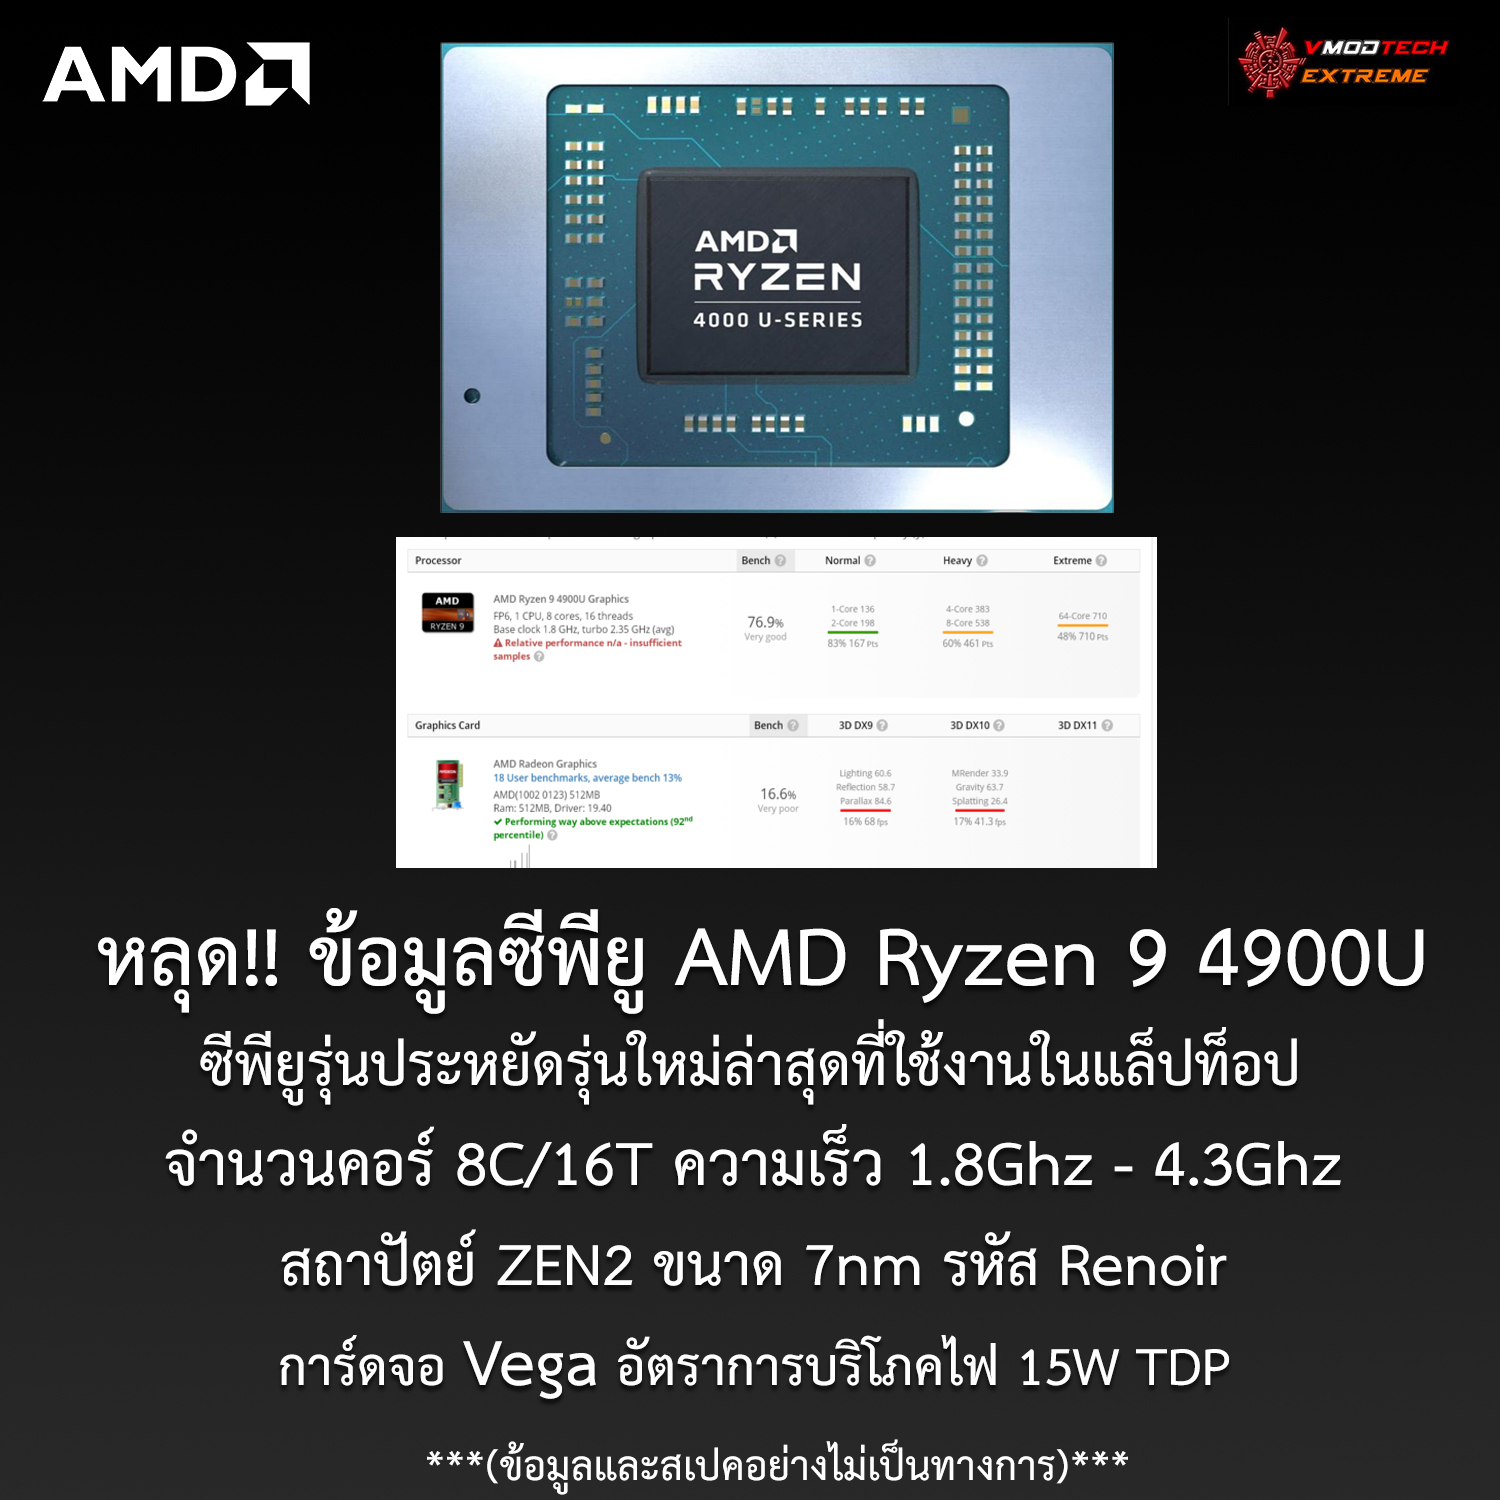 amd ryzen 9 4900u spec หลุด!! พบข้อมูล AMD Ryzen 9 4900U 8C/16T ความเร็ว 4.3Ghz สถาปัตย์ ZEN2 รหัส Renoir รุ่นใหม่ล่าสุดอย่างไม่เป็นทางการ  